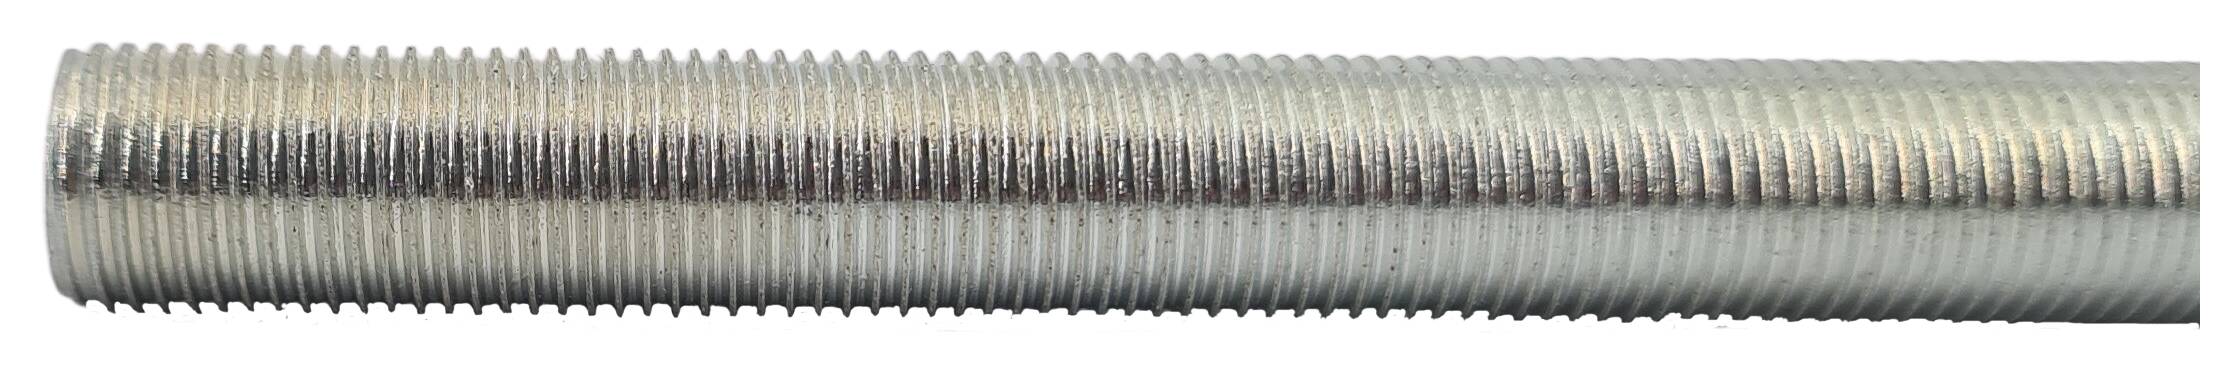 iron thread tube M10x1x315 round zinc